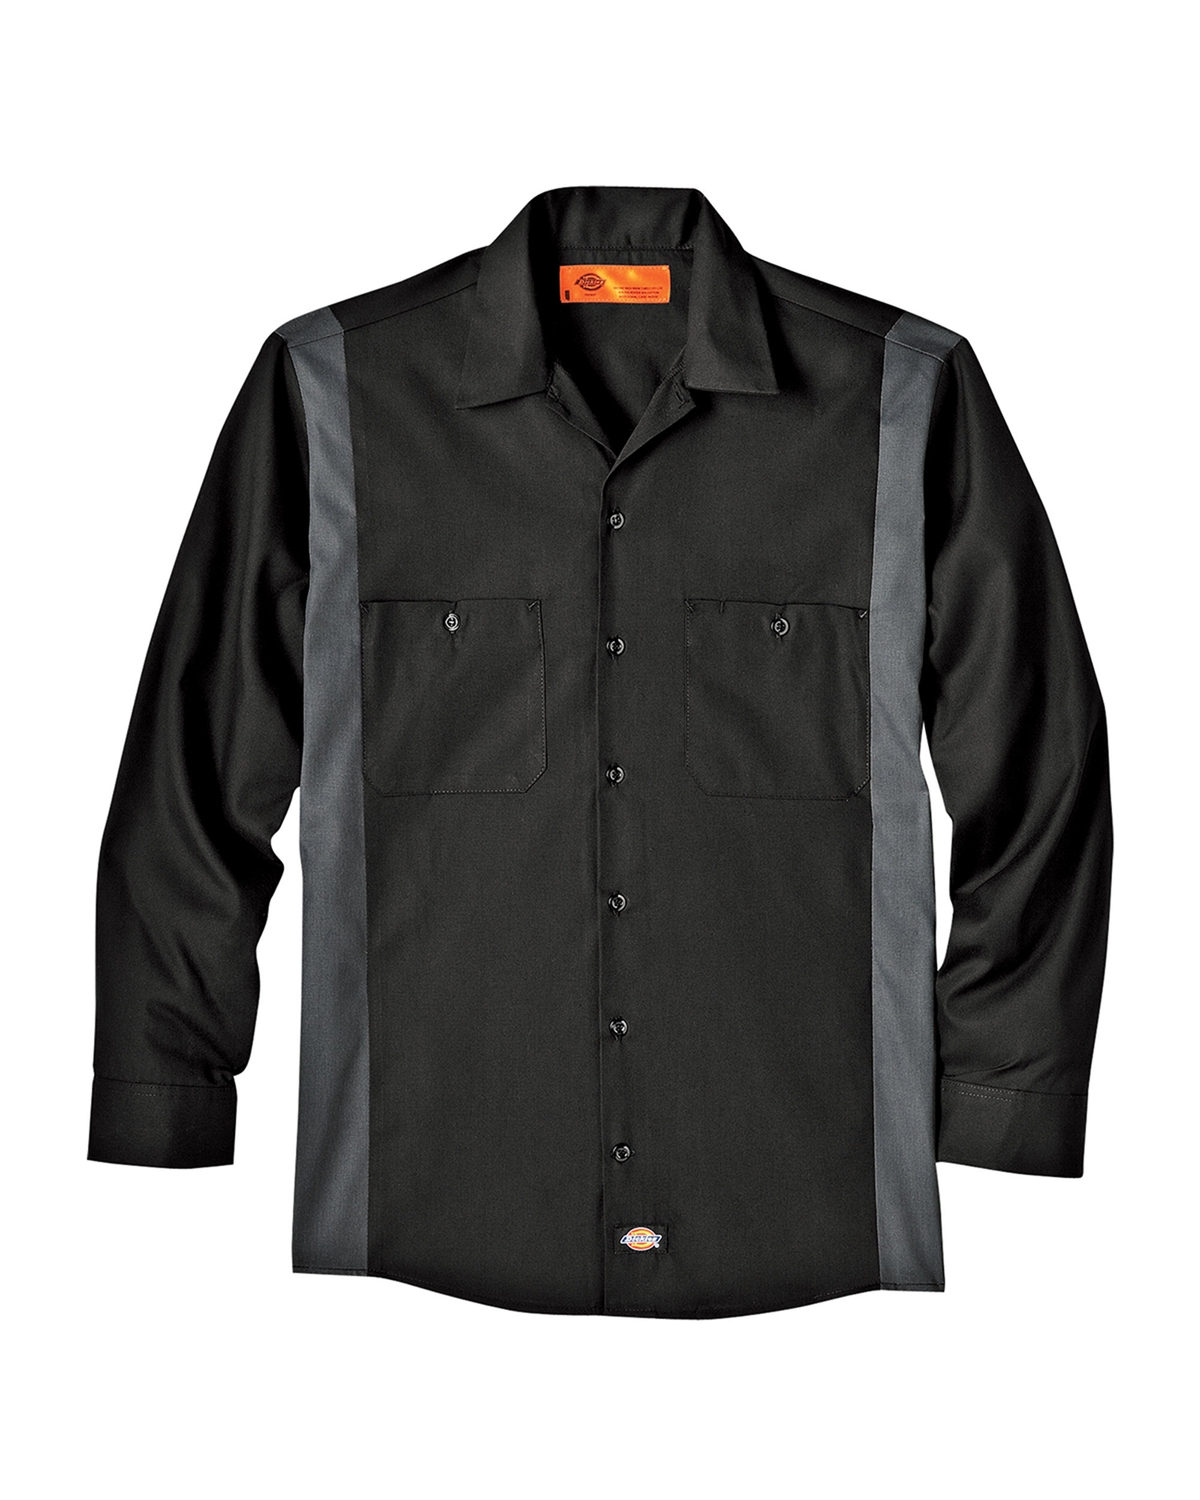 LL524 Dickies Unisex Industrial Color Block Long-Sleeve Shirt